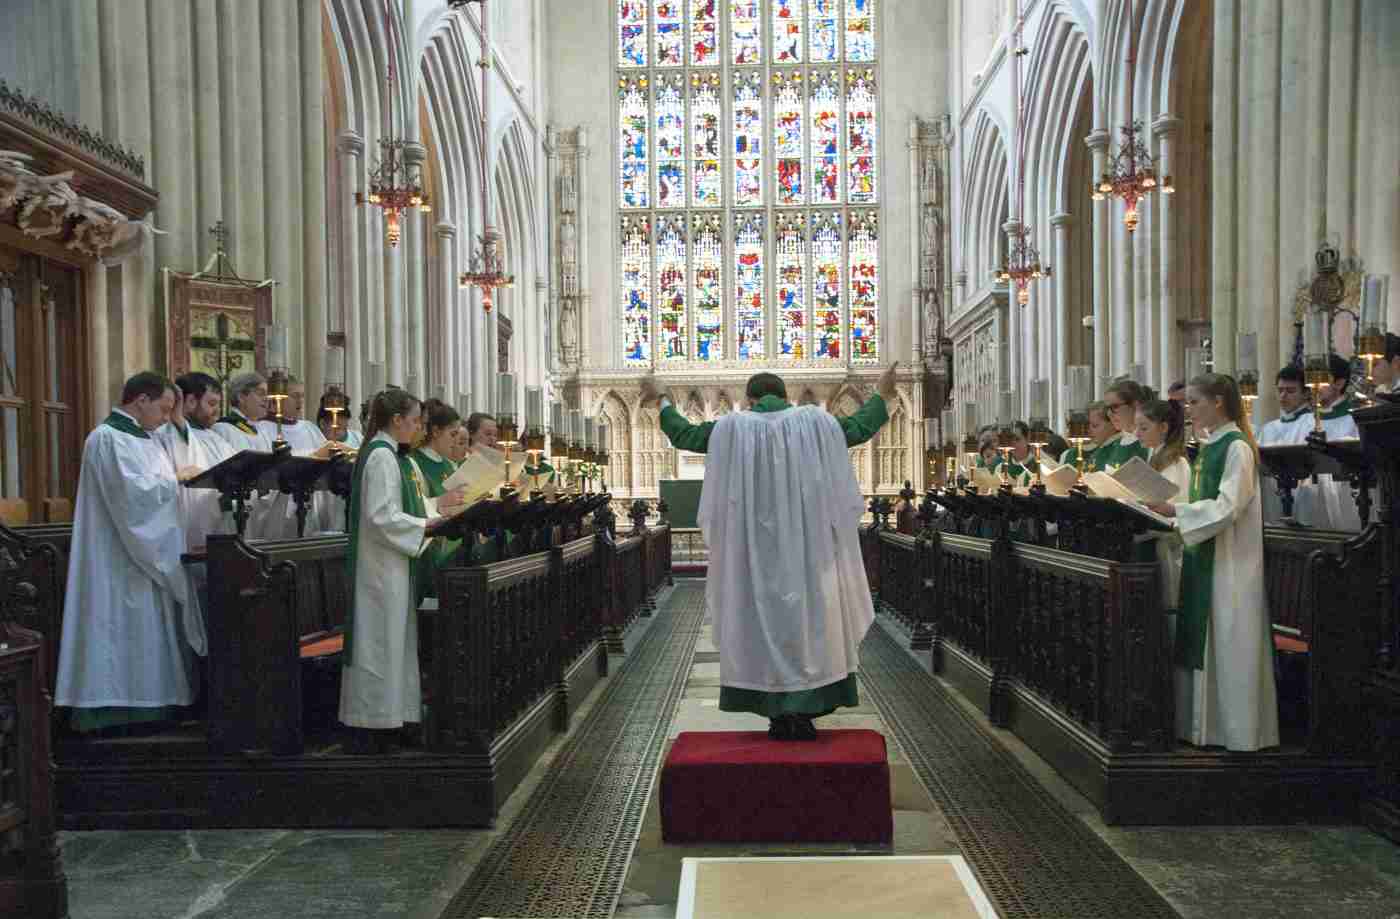 Bath Abbey Choirs and conductor